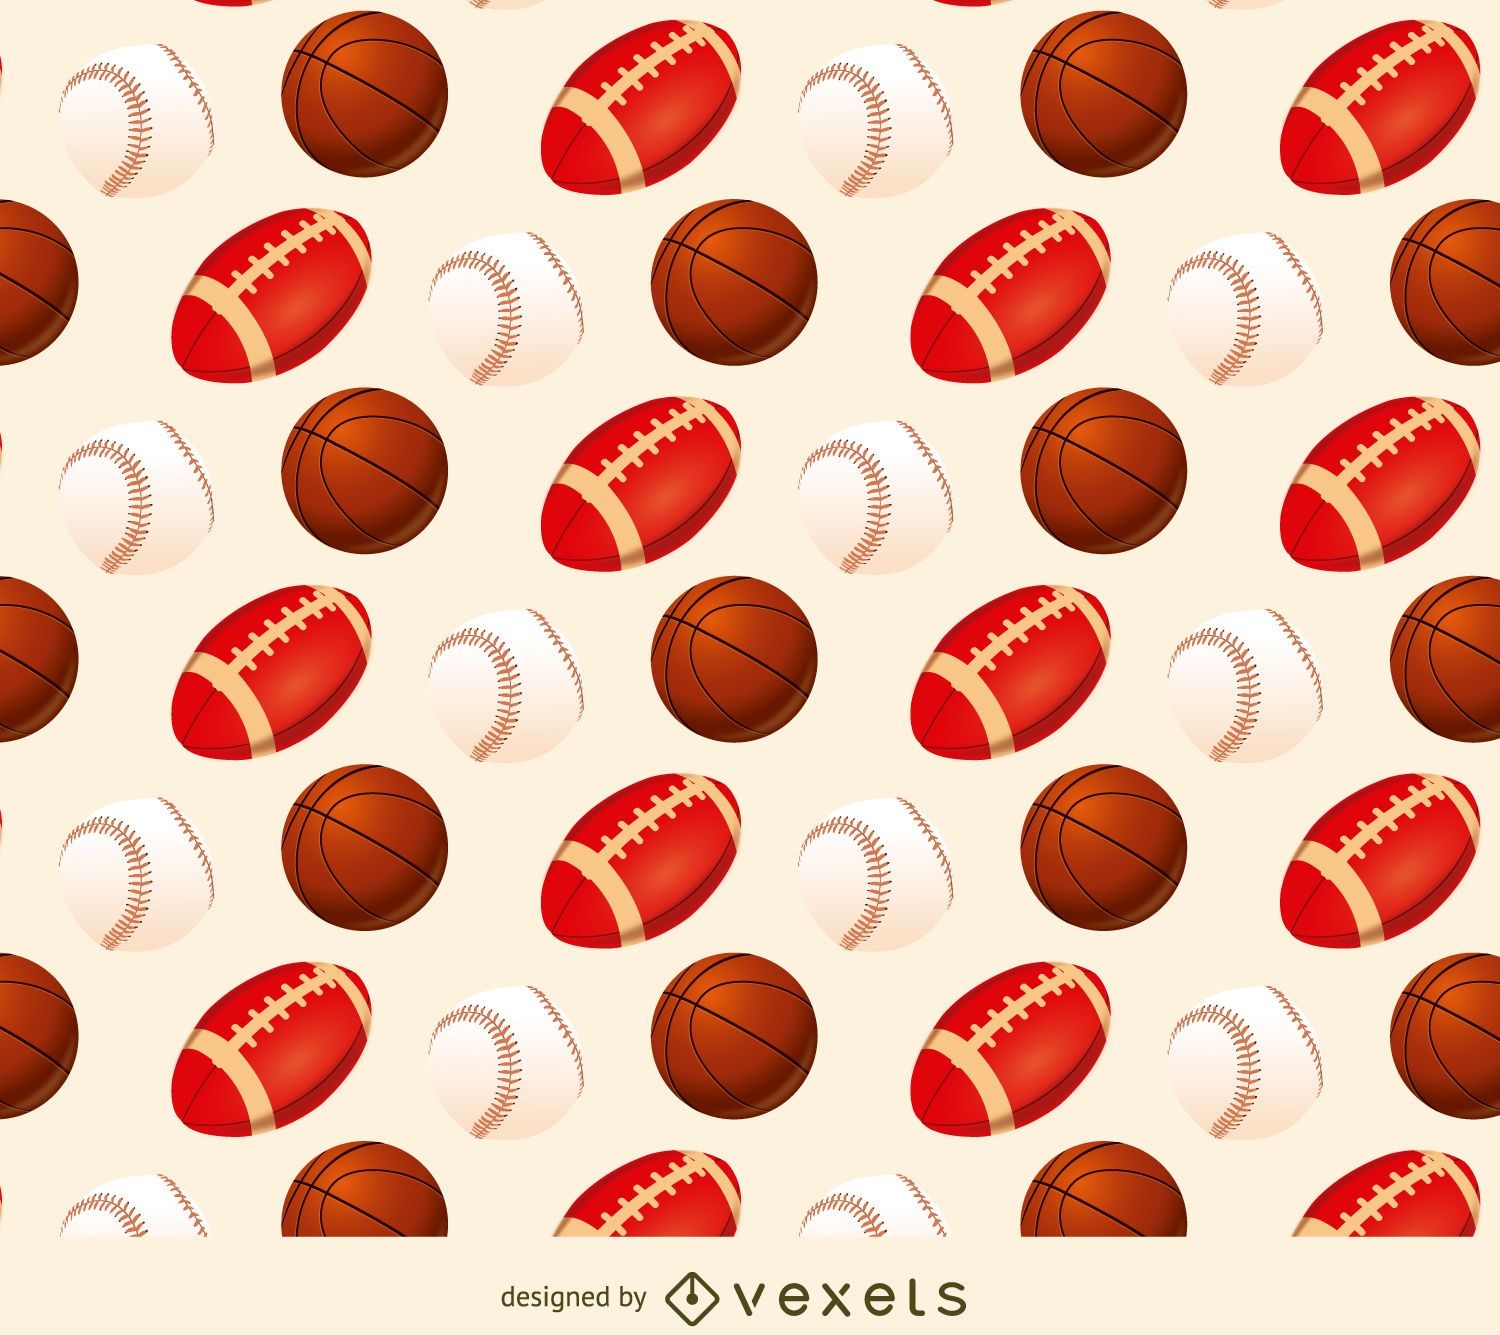 Baseball basketball and football pattern